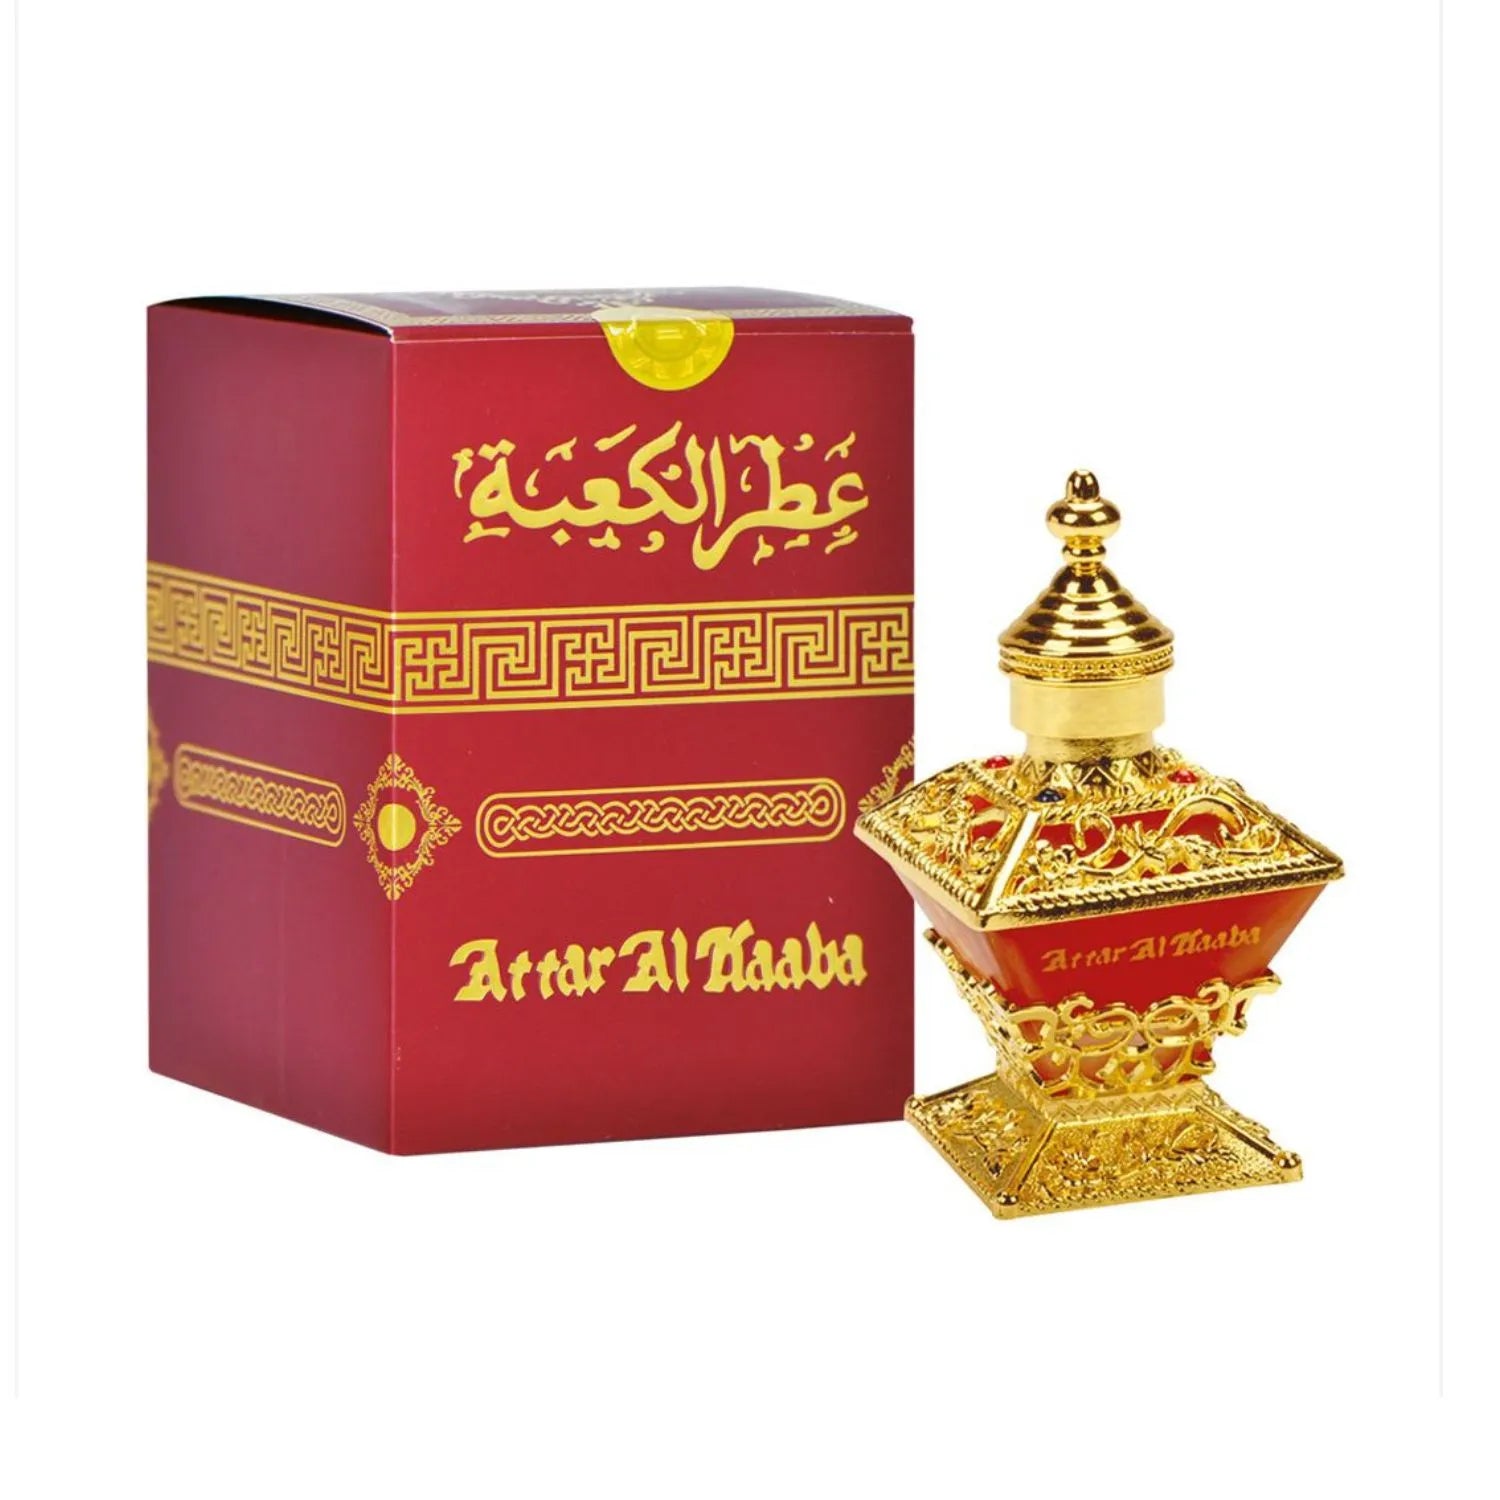 Attar Al Kaaba Perfume Oil Bottle And Package